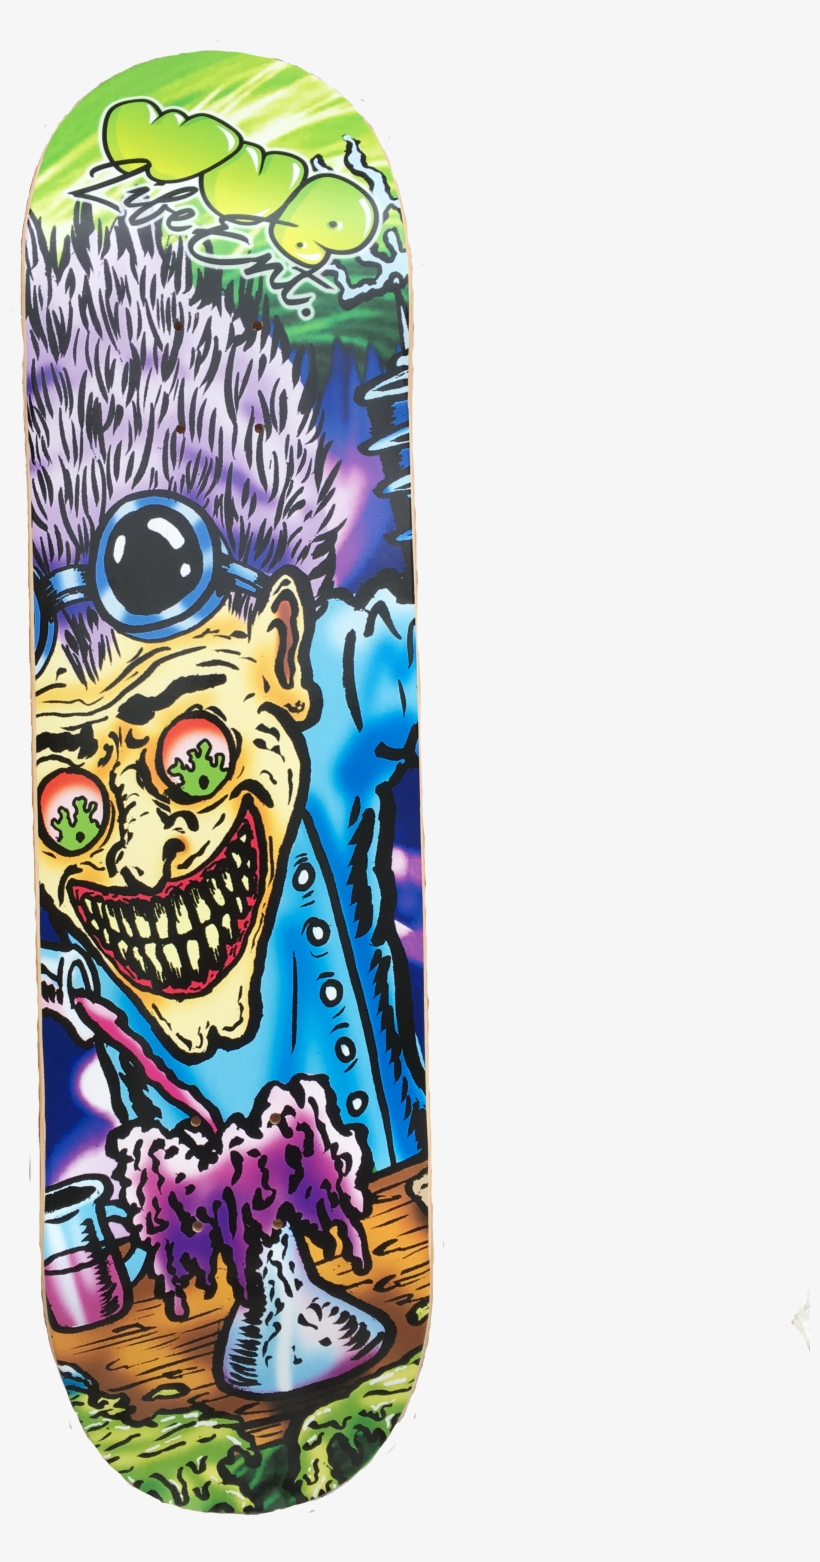 Mad Scientist - Hoodie $45 - 00 - Image Of Wub Life - Skateboard Deck, transparent png #7818598